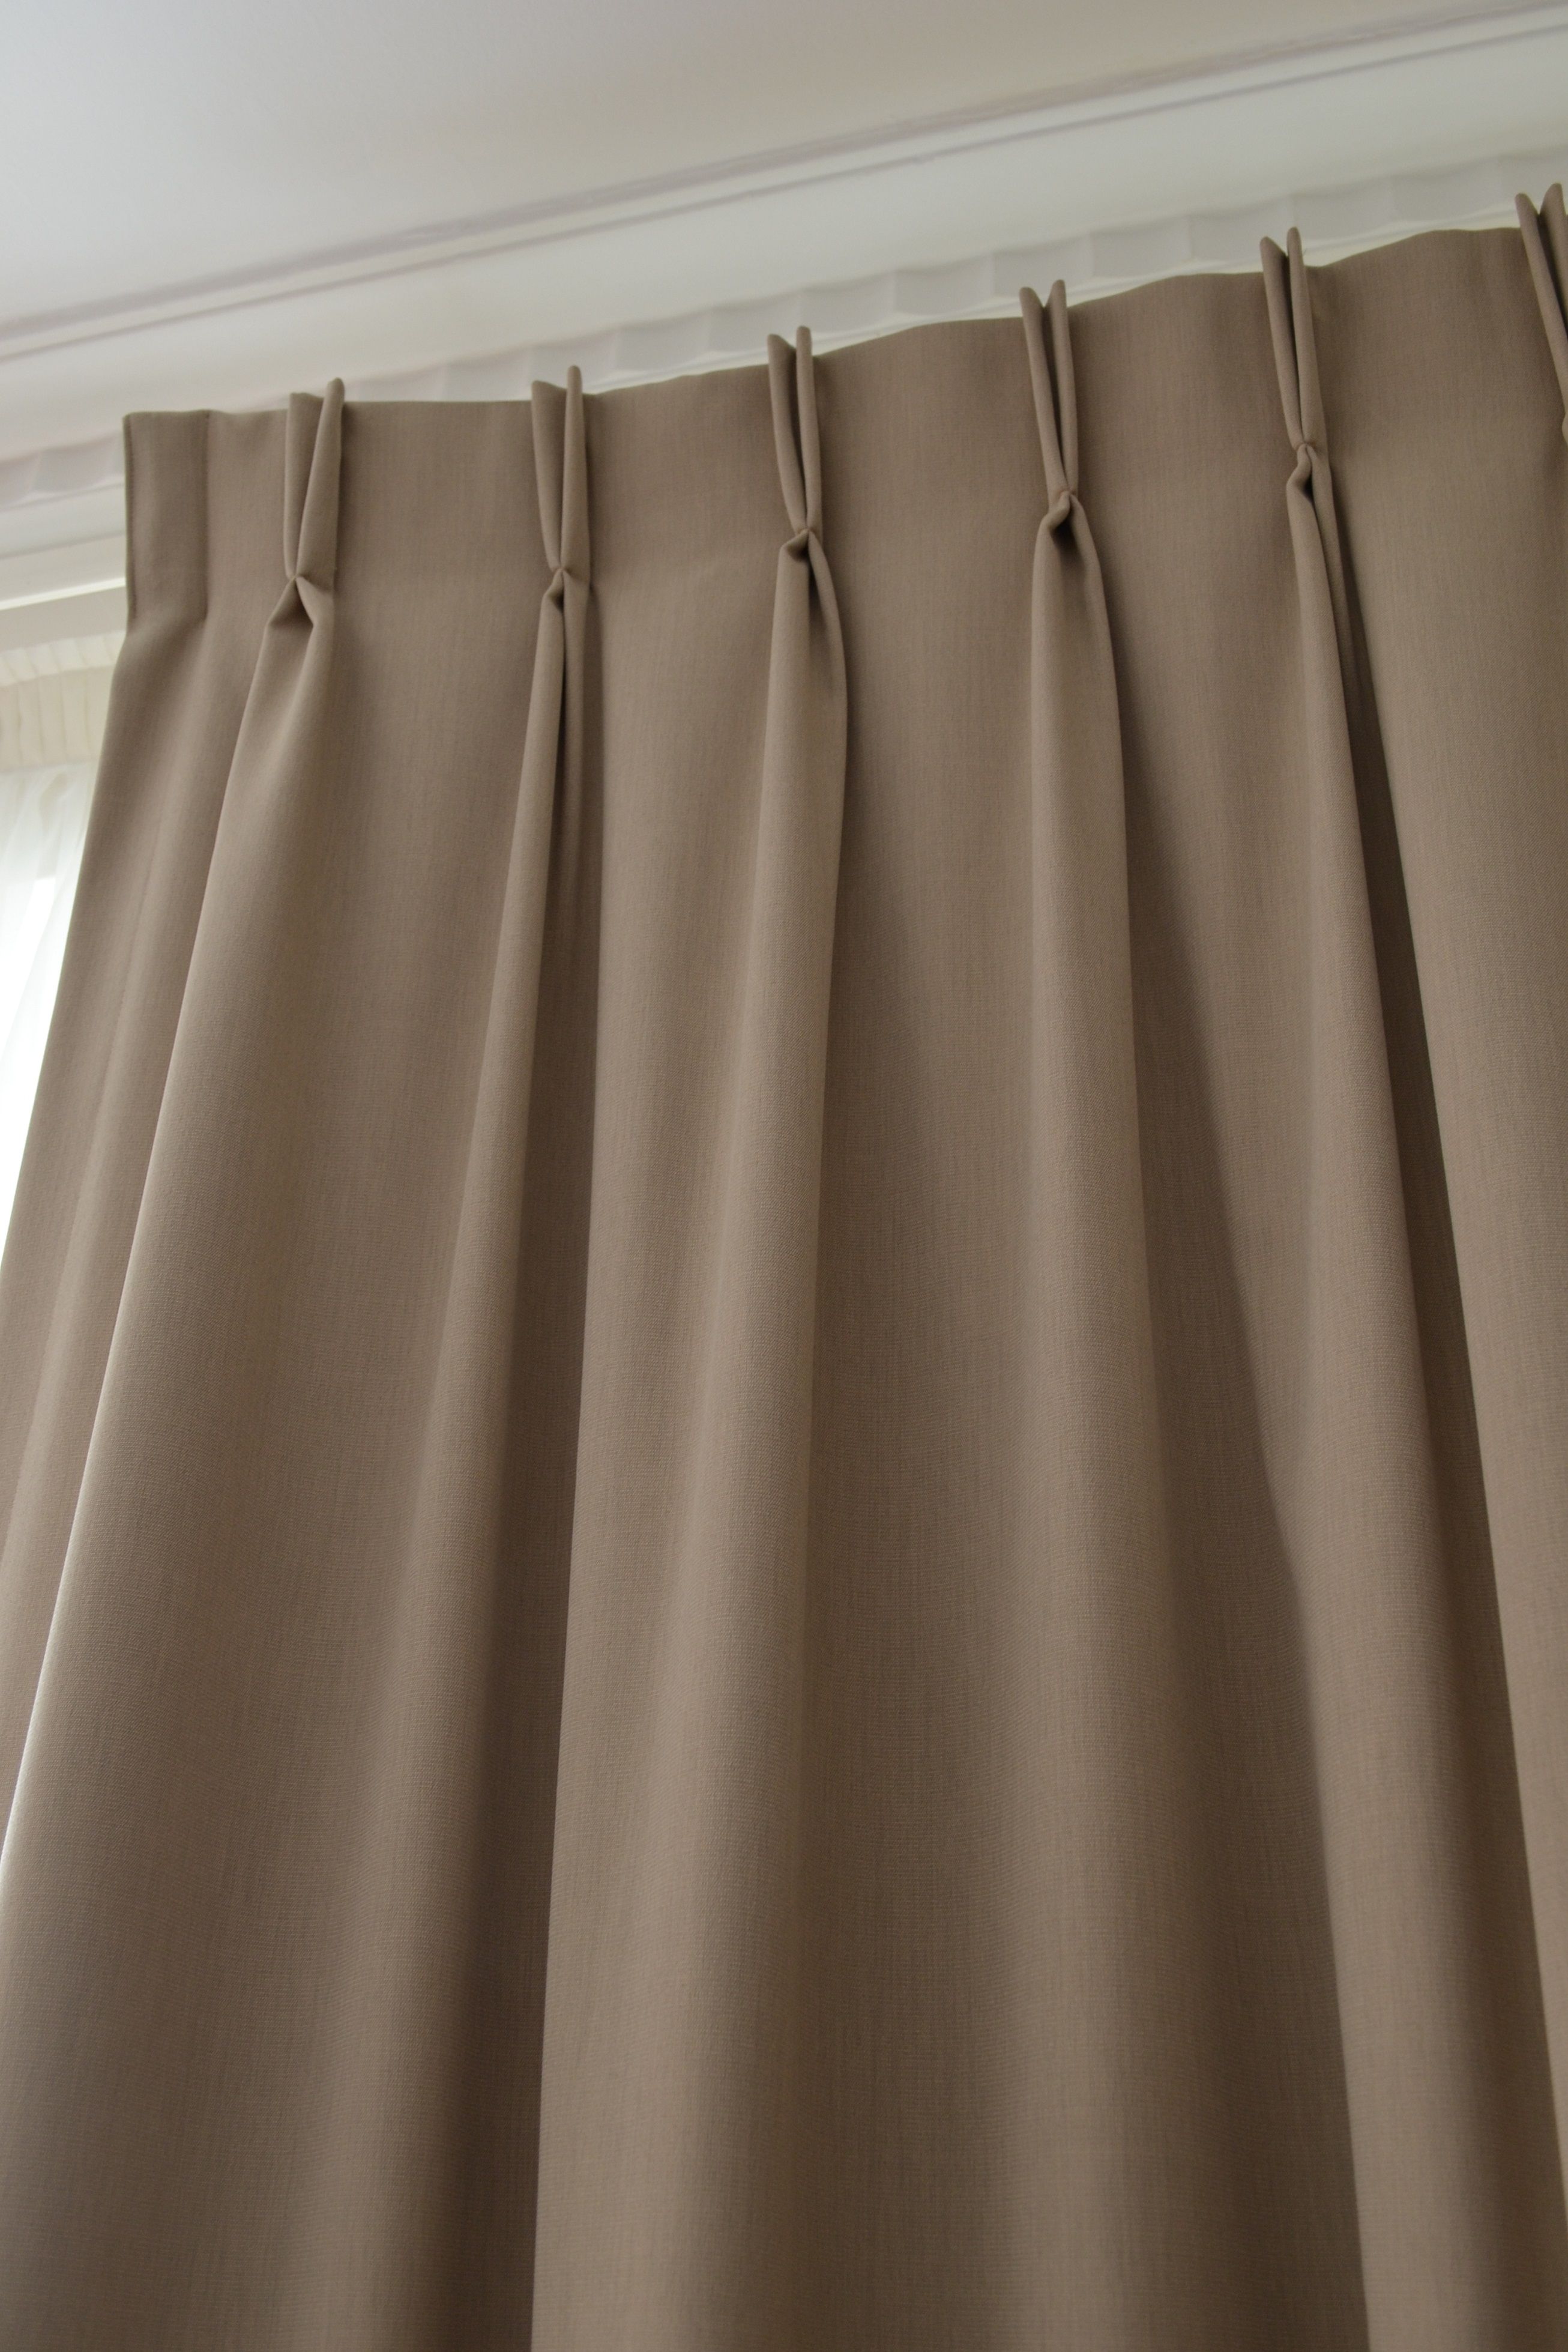 Double Pinch Pleat Curtains  Curtain Ideas